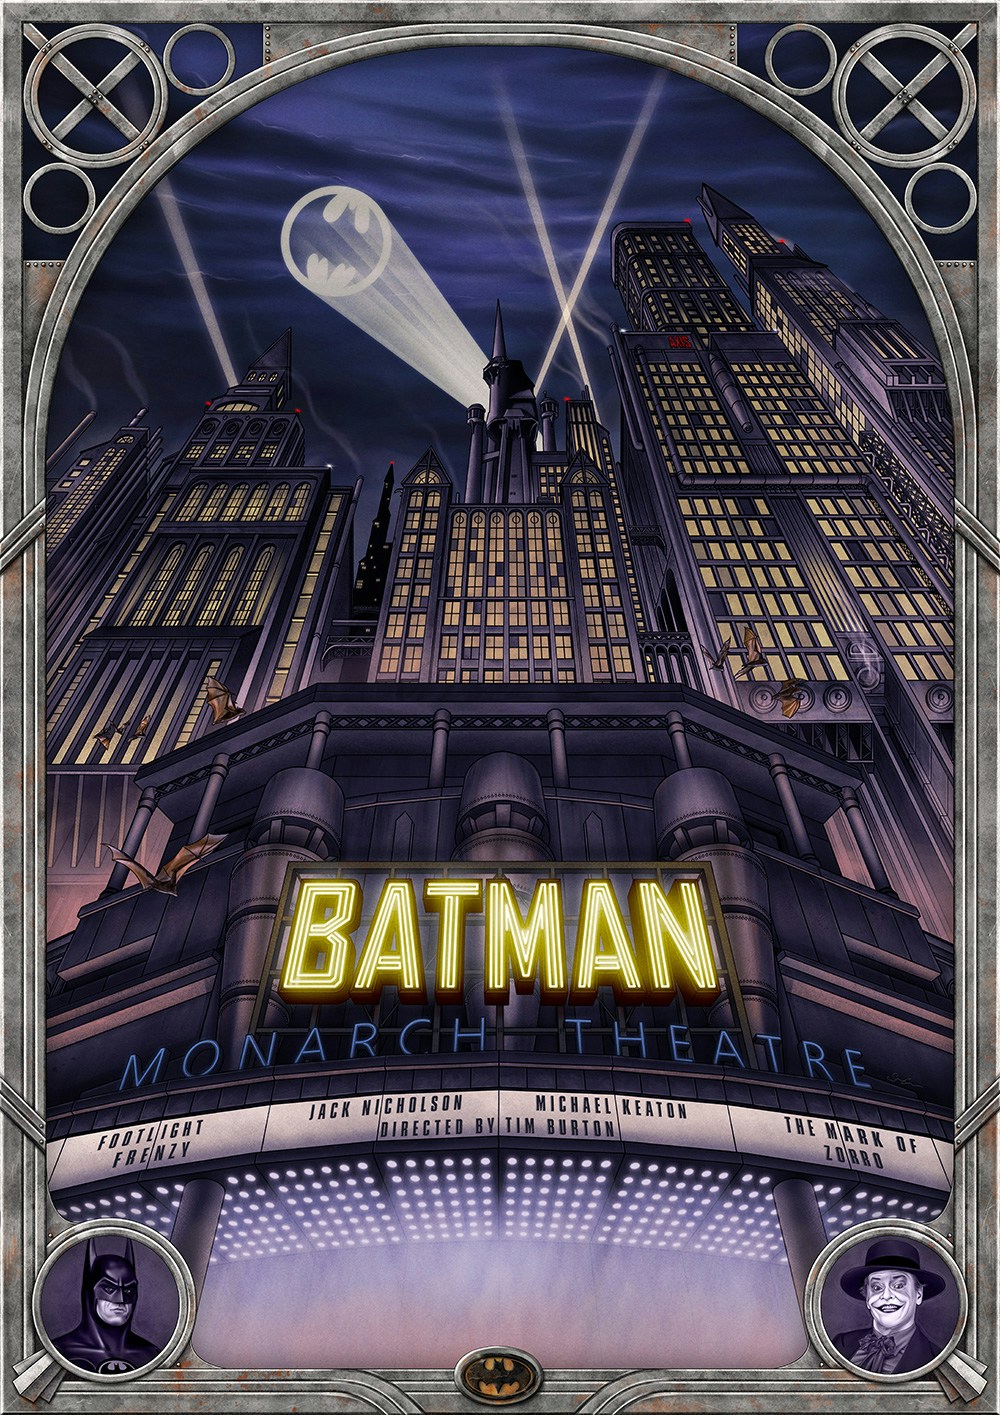 Batman (1989) - Sam Green - Illustrator & Graphic Artist